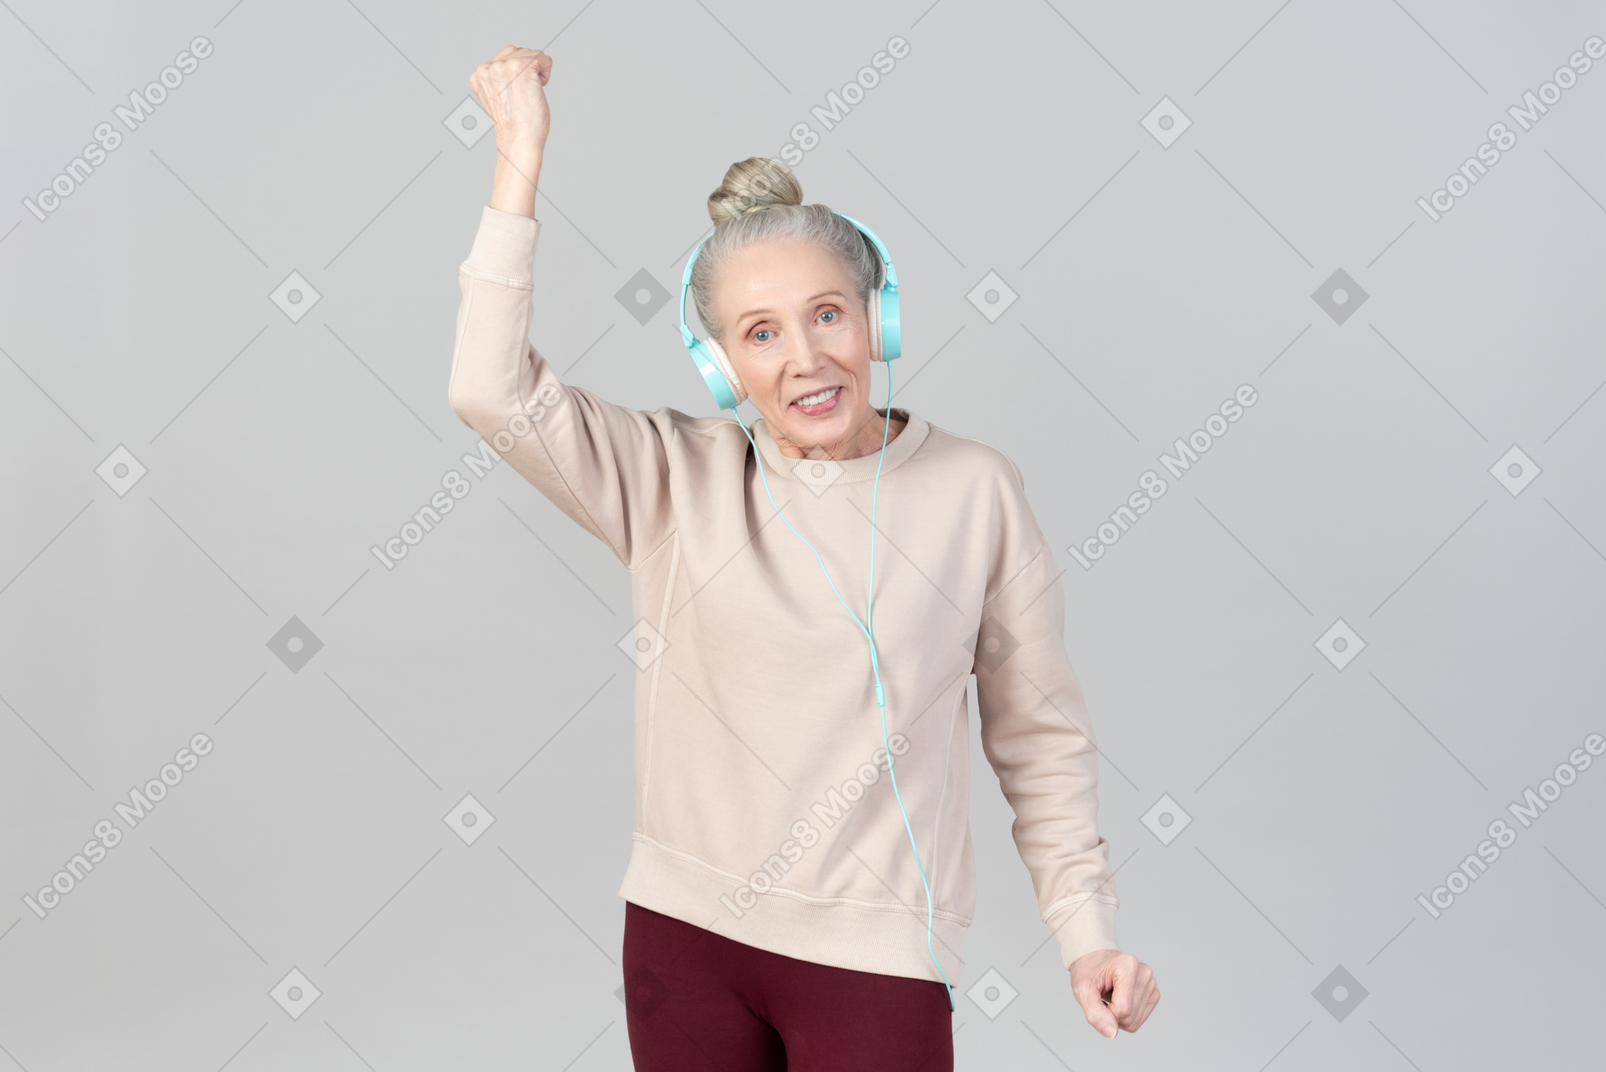 Joyful young lady in headphones dancing to music